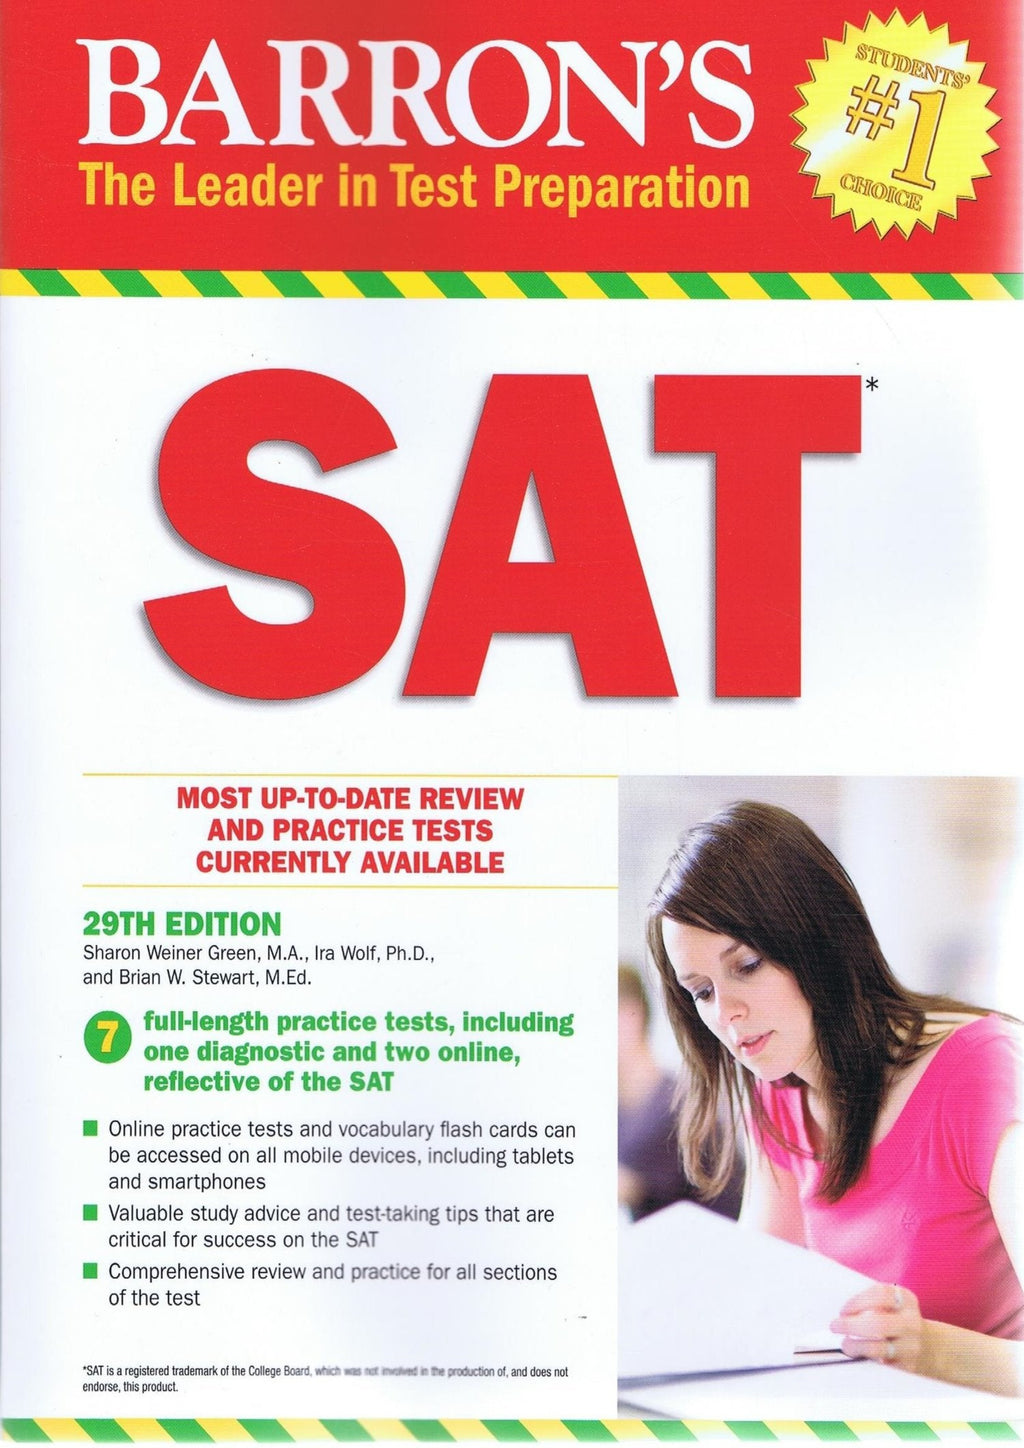 Barron's SAT Test Preparation (29th Edition)